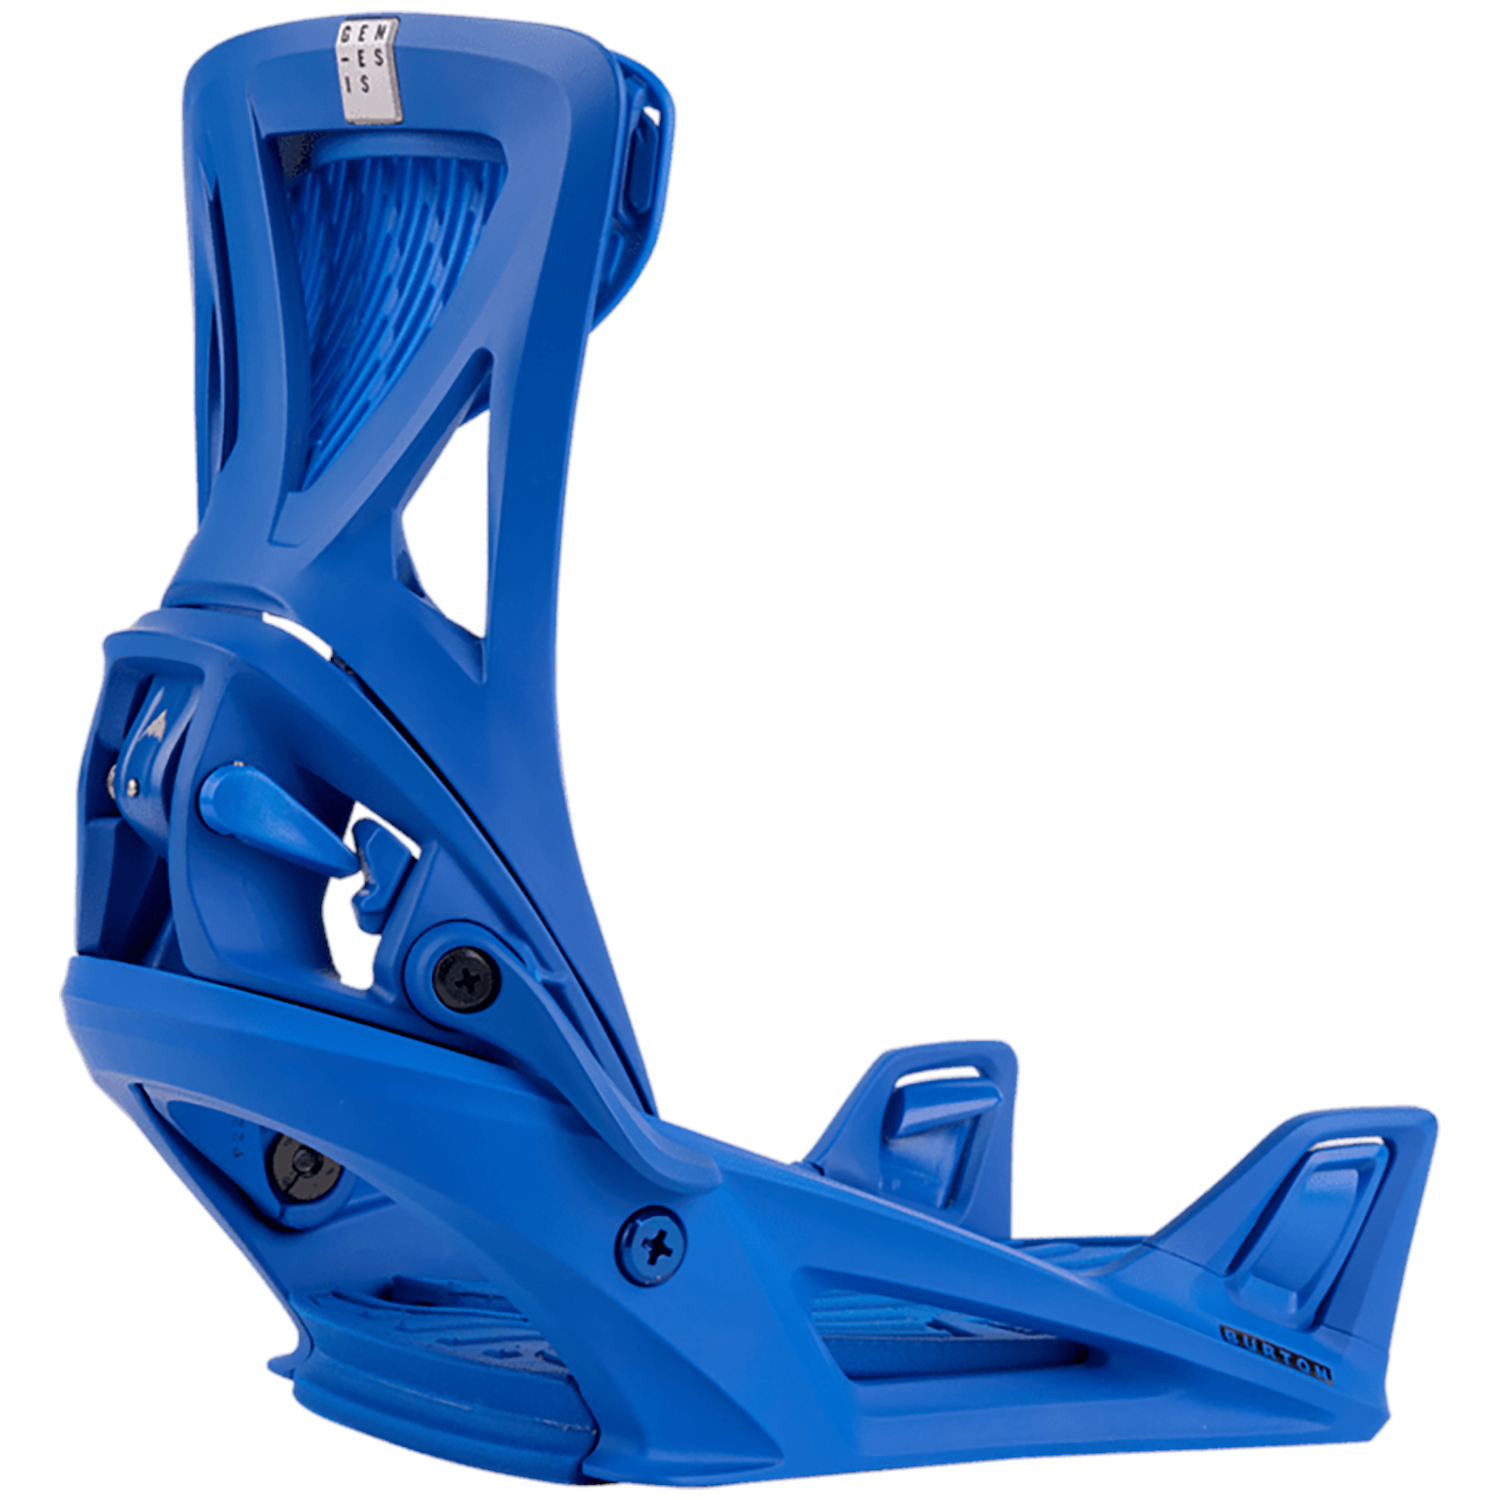 Burton Step On X Review Binding Review - Snowboard Robot